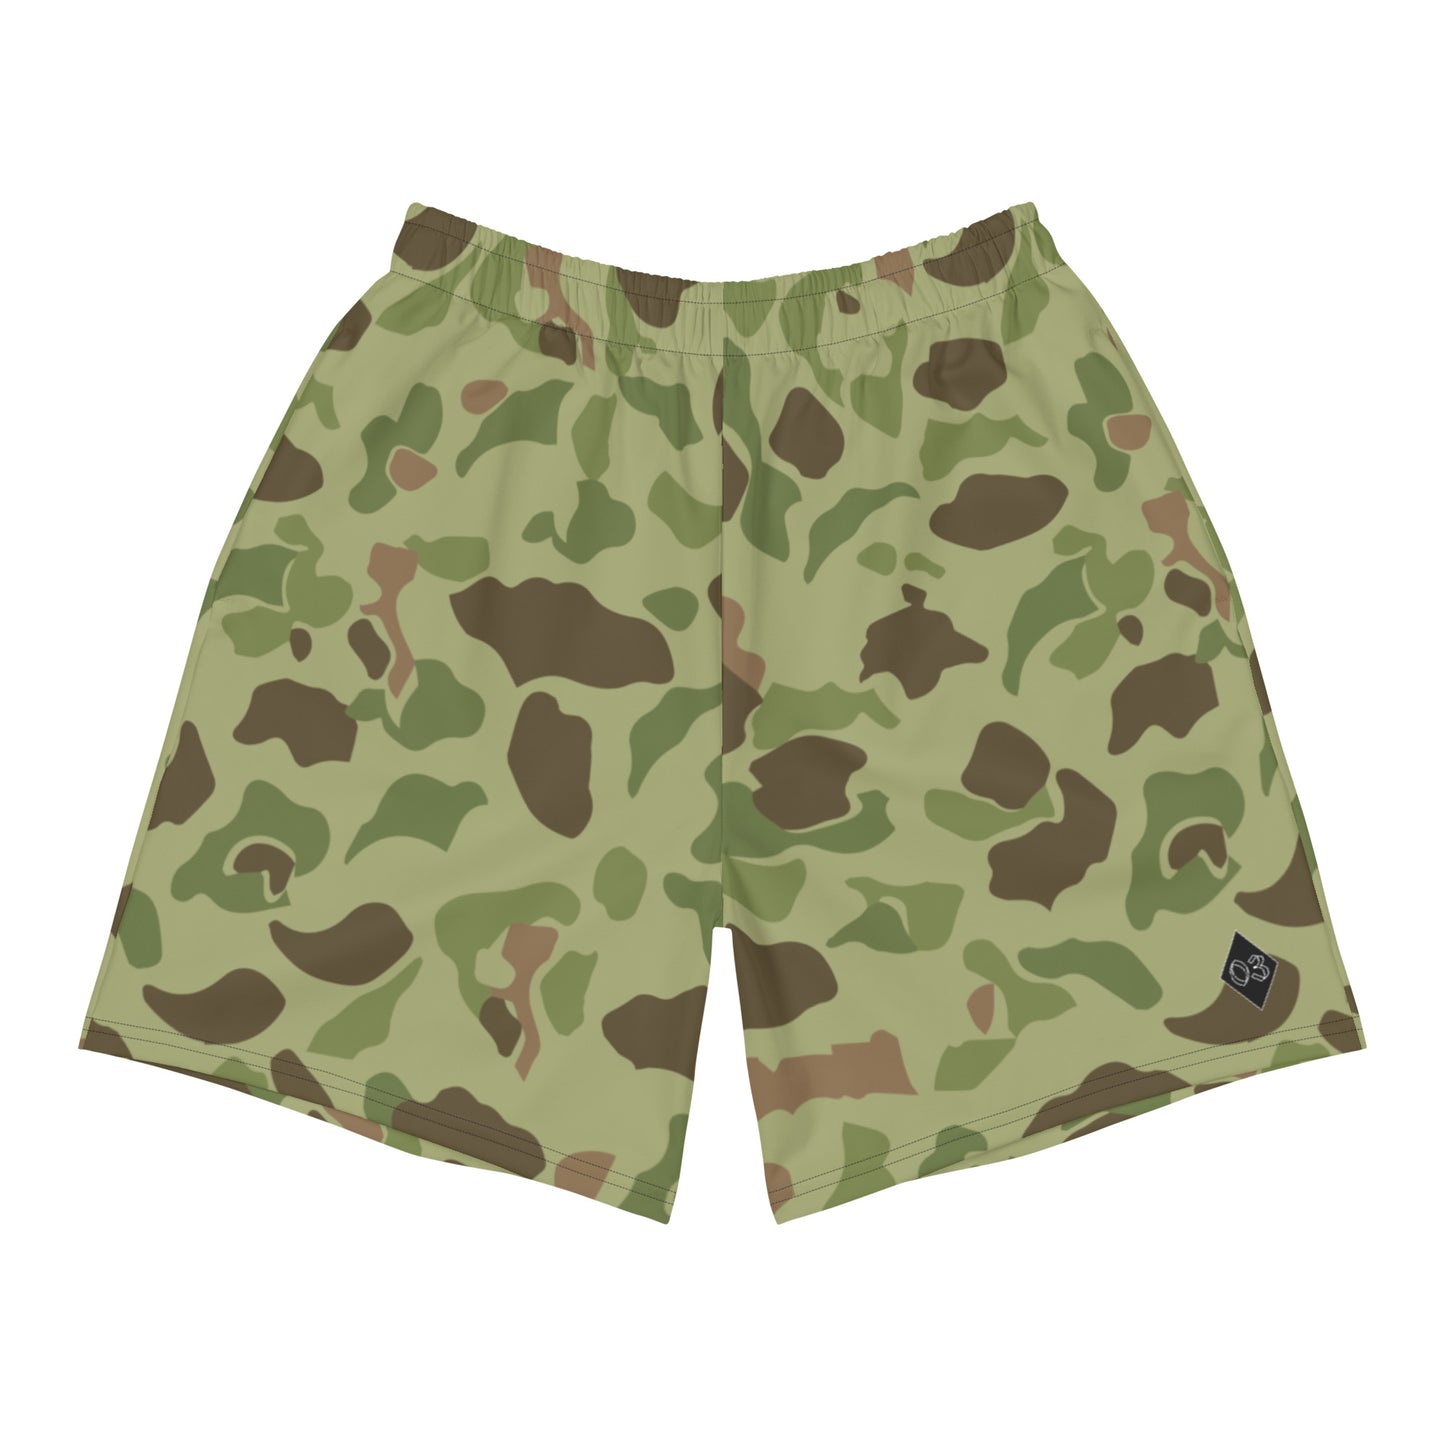 PT Shorts - Frog Skin Tropic